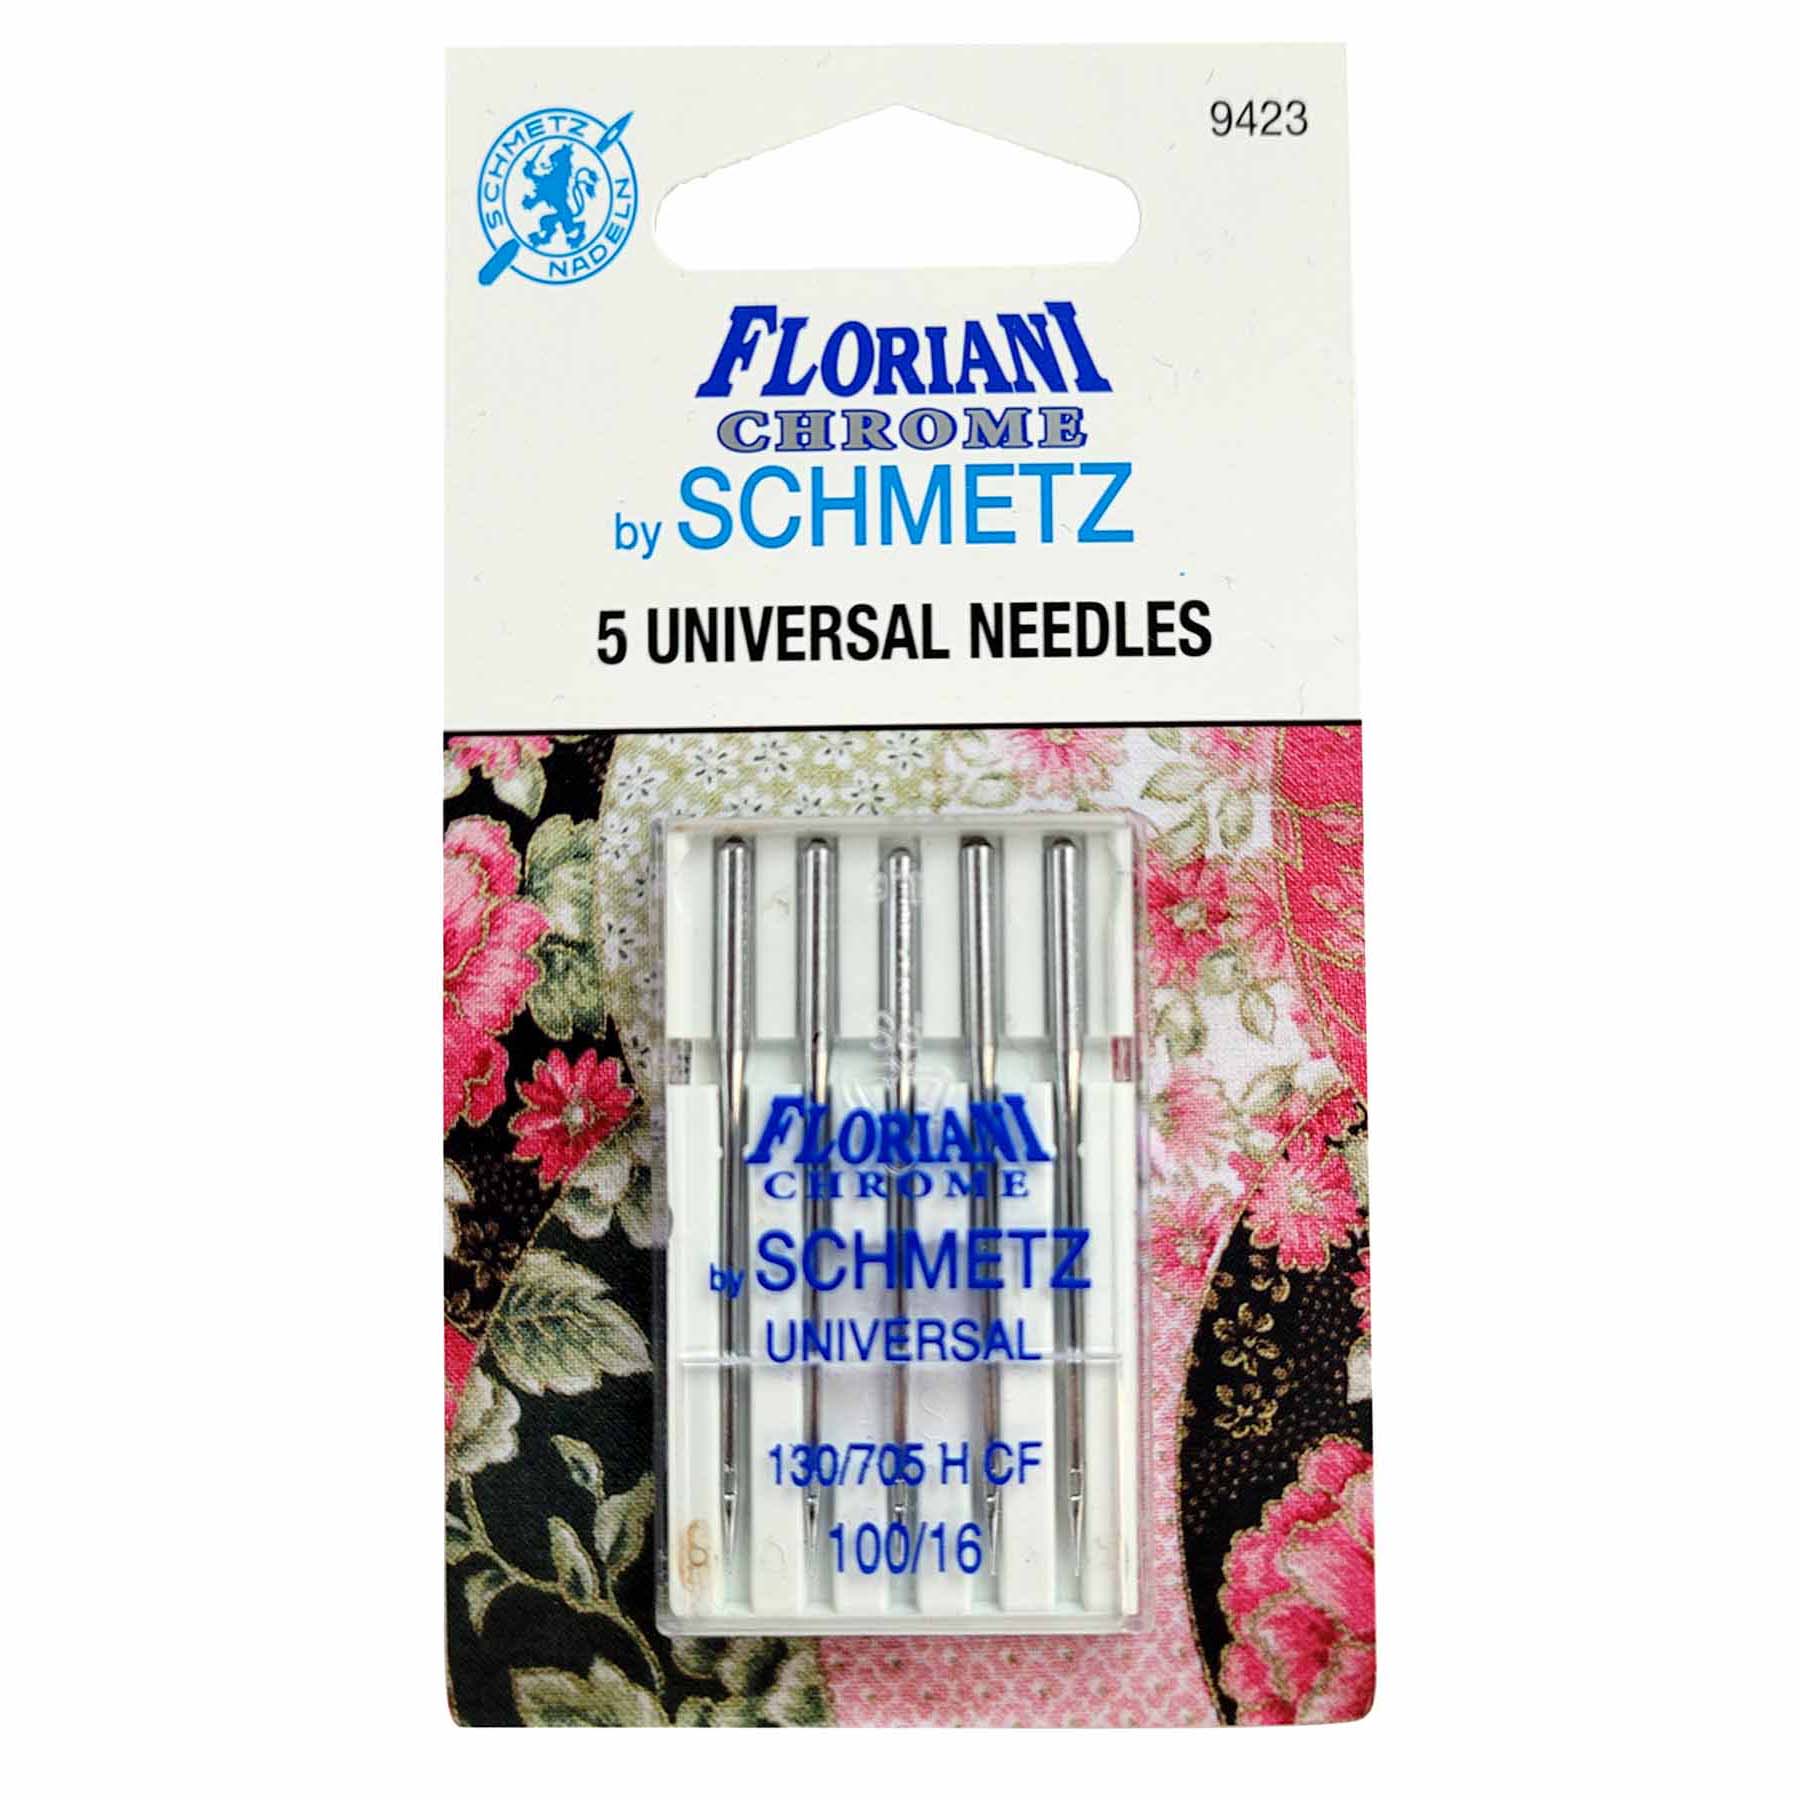 Needles, Universal - Floriani Chrome by Schmetz 5ct